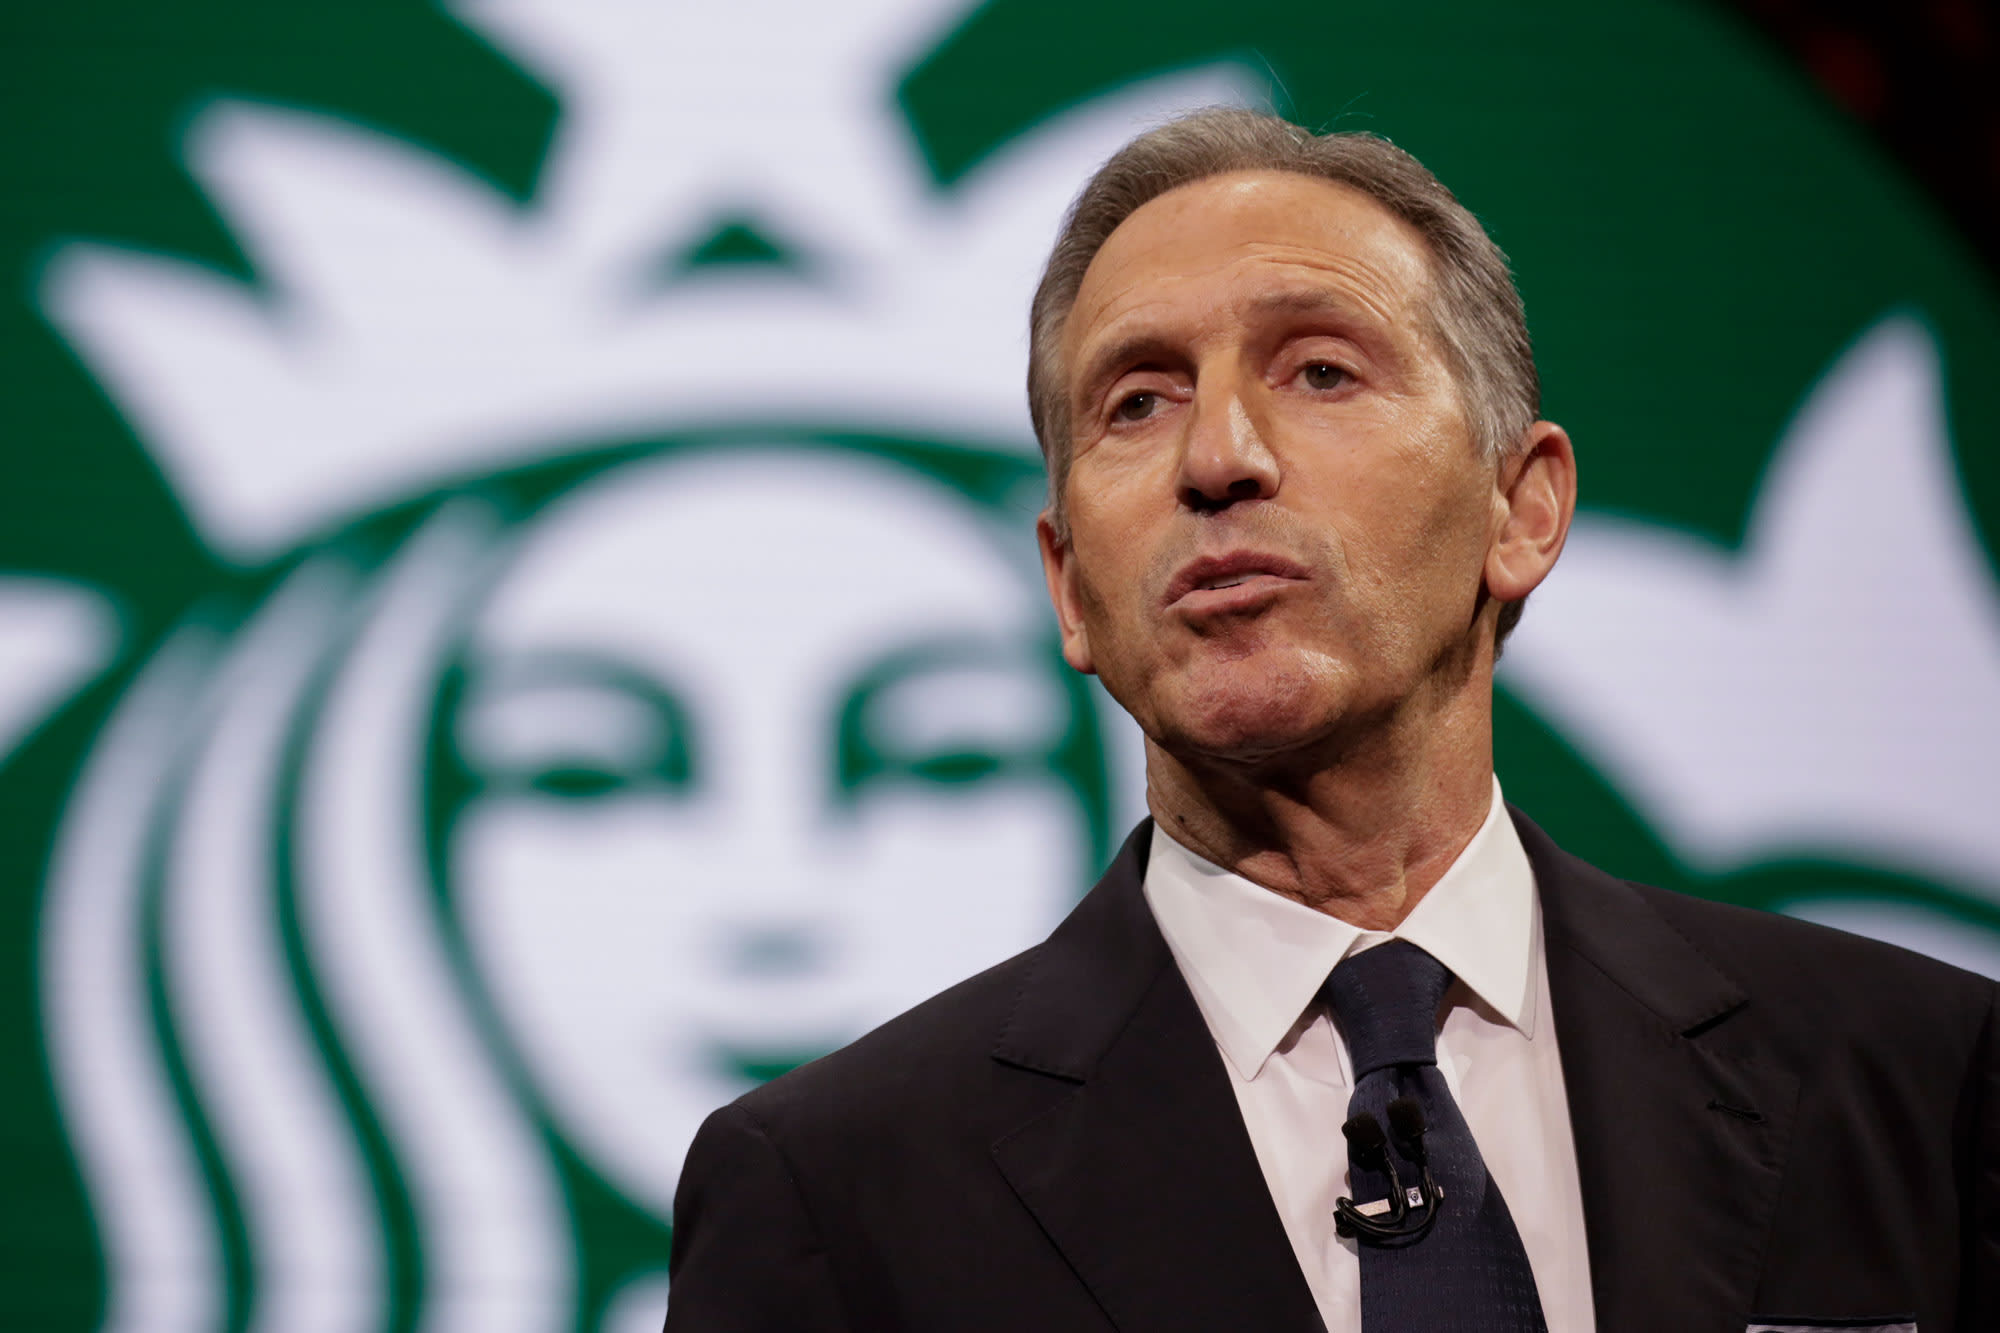 Howard Schultz tells Cramer: China will overtake U.S. as Starbucks' biggest market by 2025